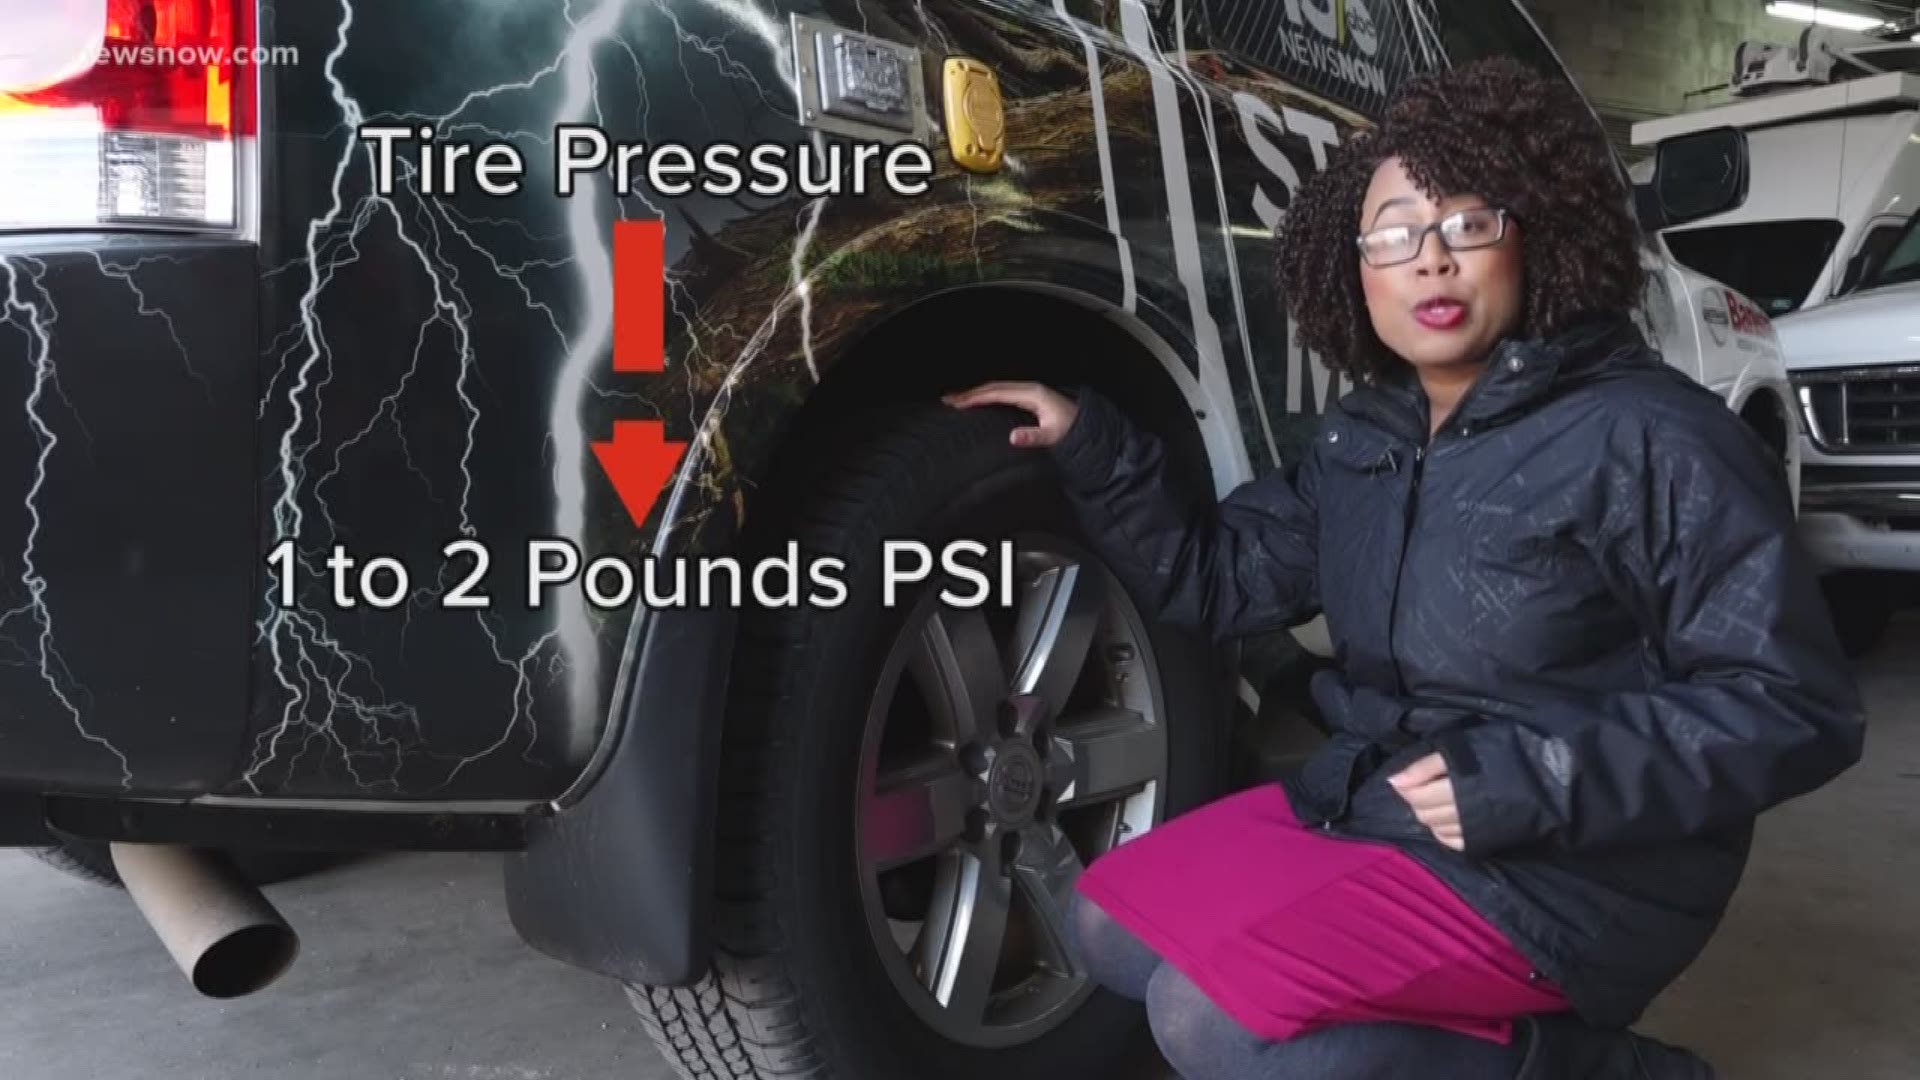 Low temperatures often mean low tire pressure.